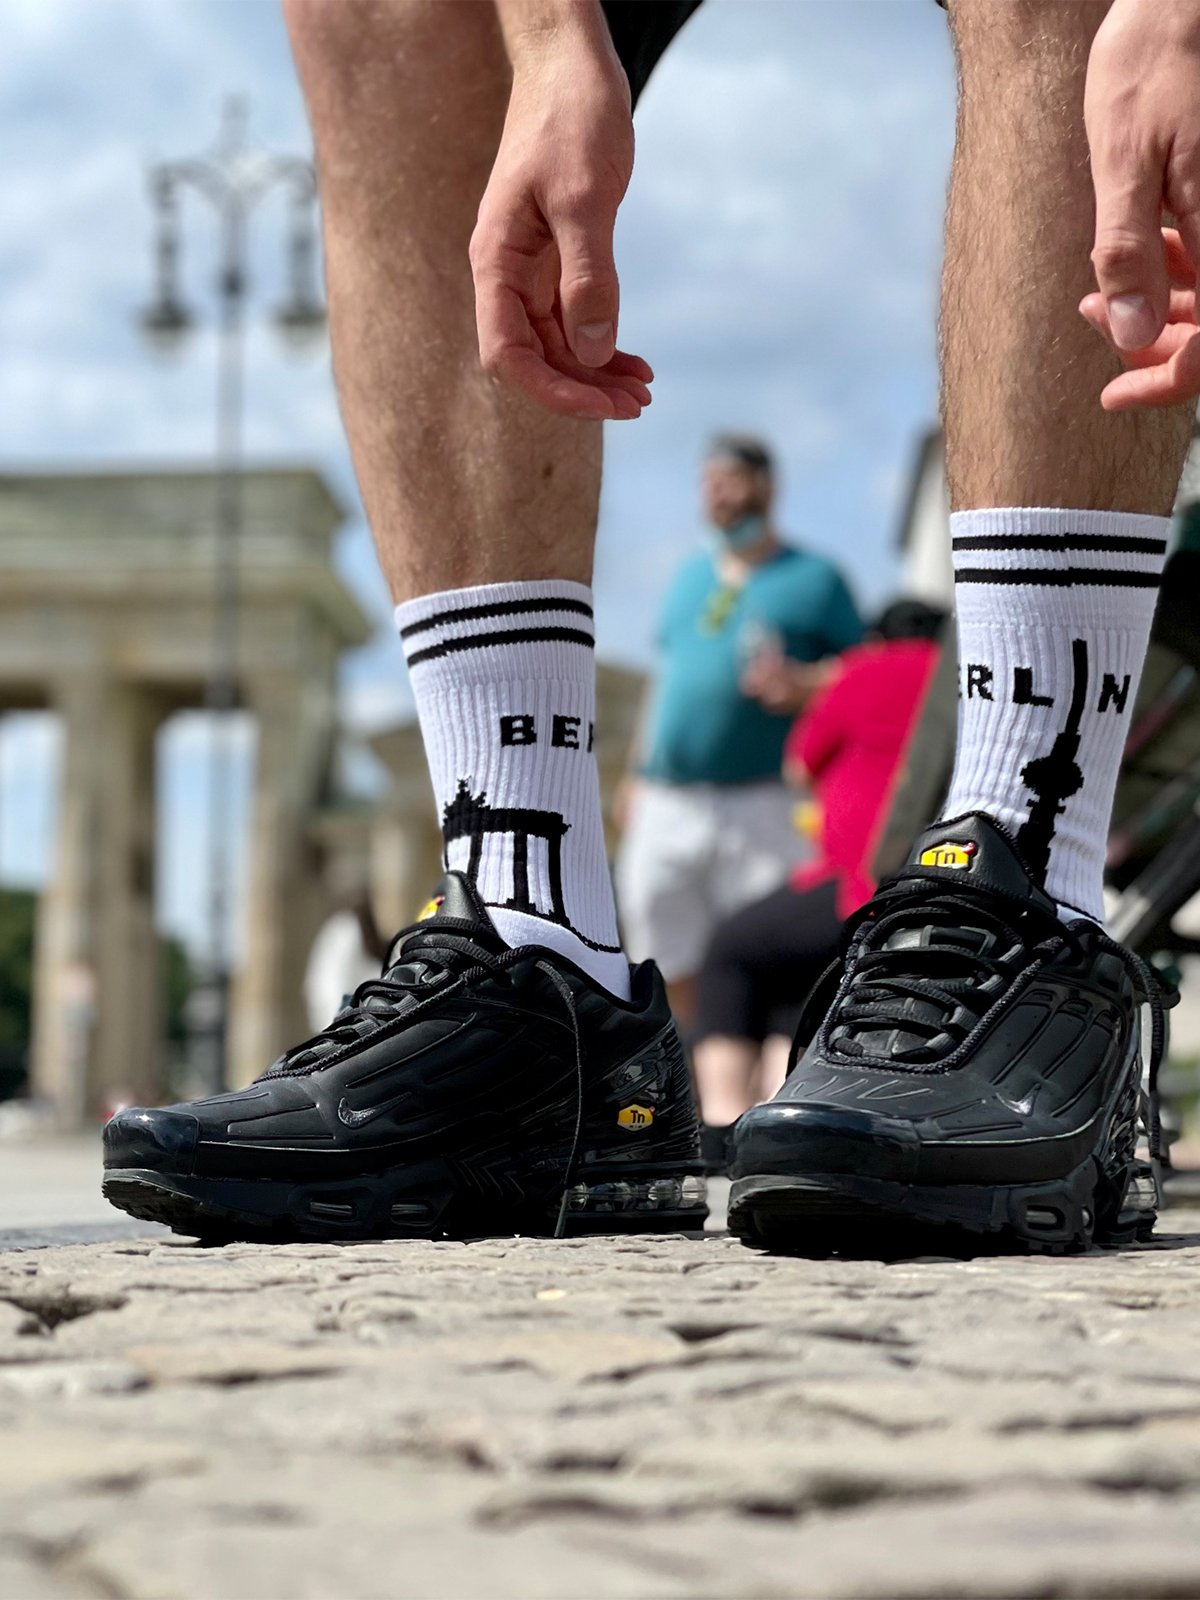 Berlin Socks